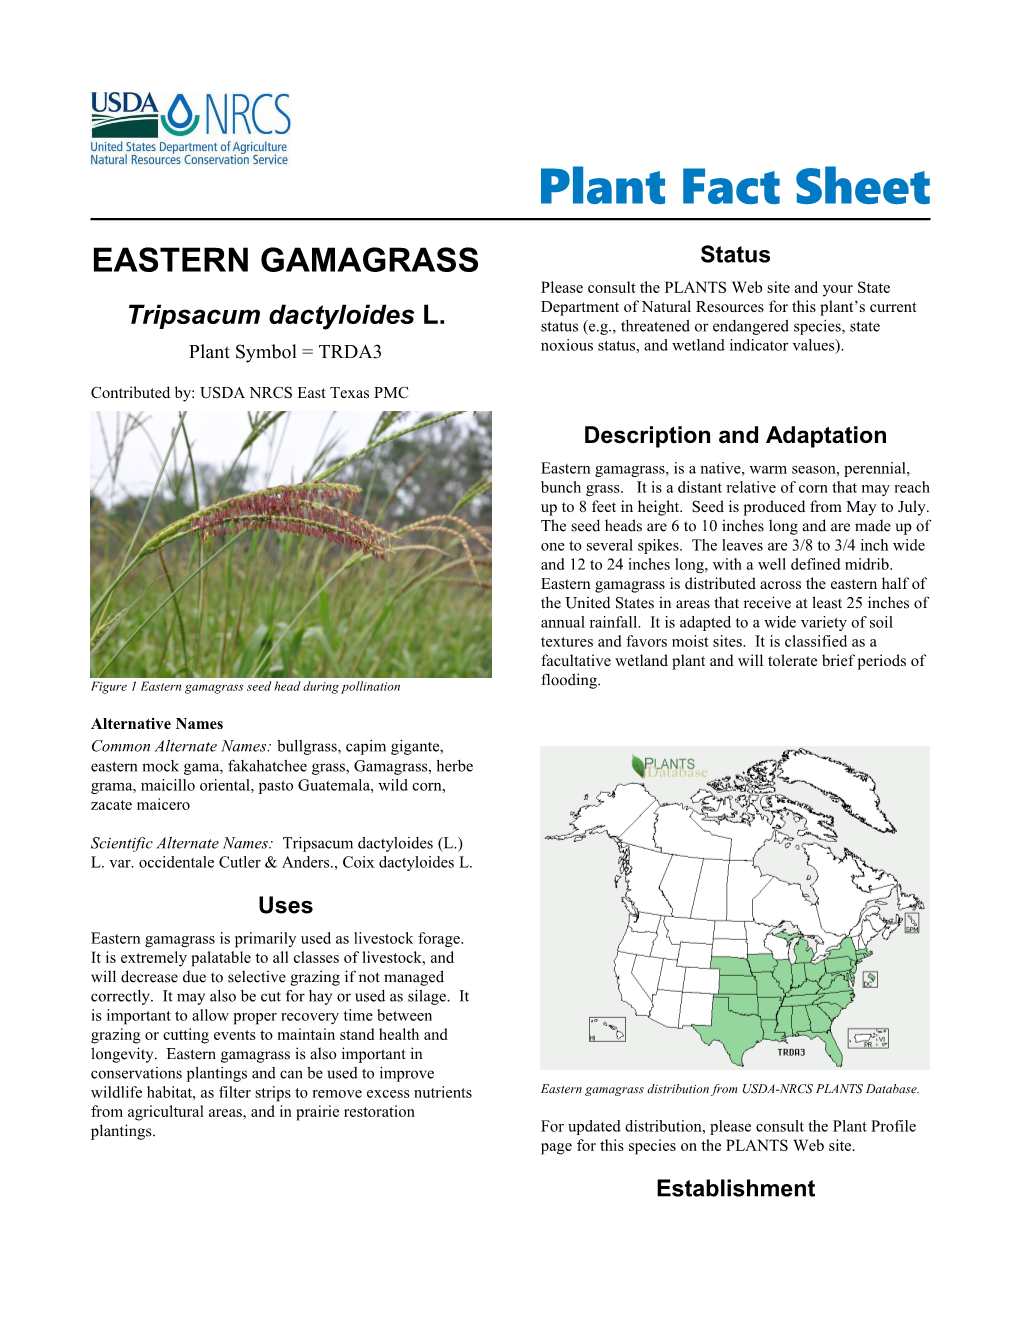 Plant Fact Sheet Eastern Gamagrass (Tripsacum Dactyloides)